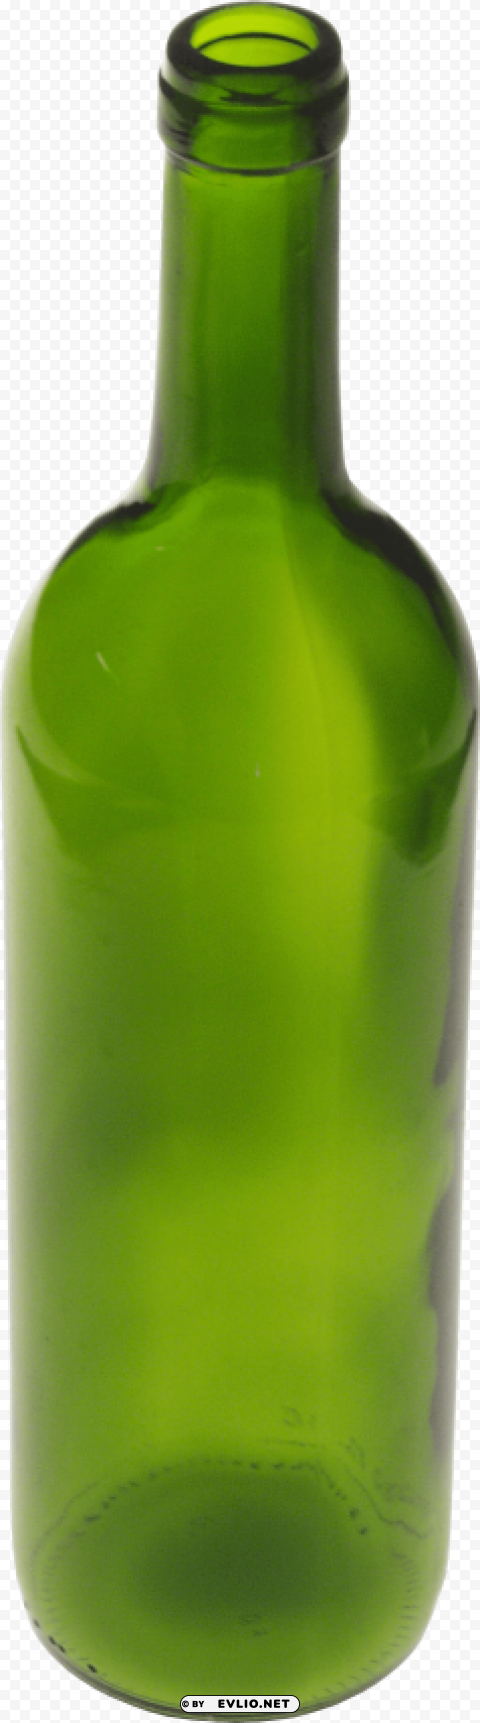 empty bottle HighQuality Transparent PNG Element